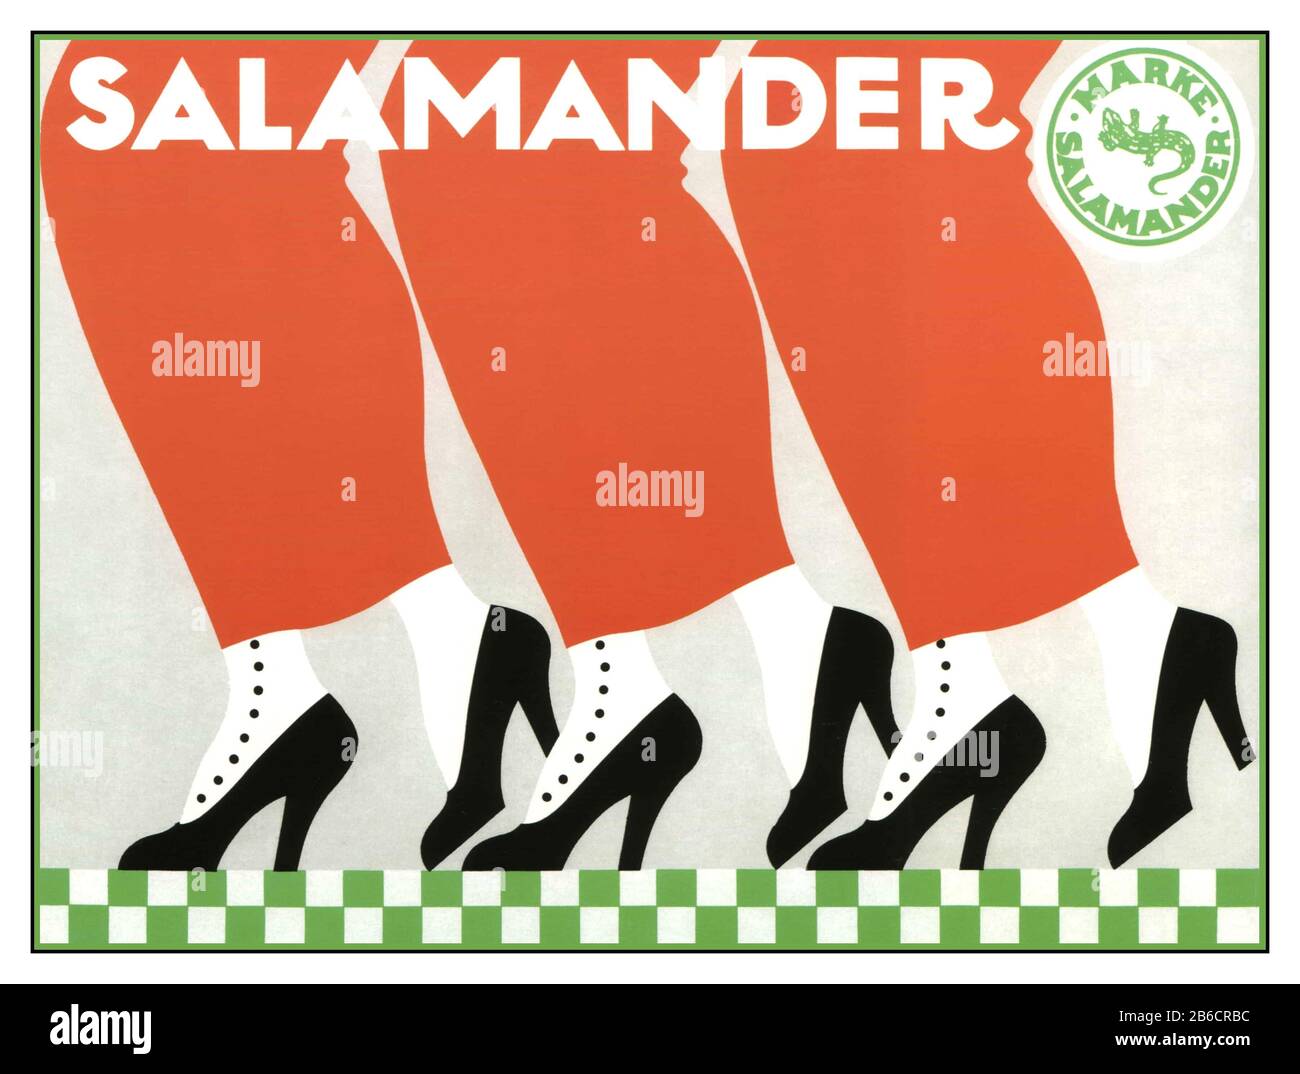 SALAMANDER SHOES Vintage 1912 German Poster Advertisement Salamander Shoes.'Marke Salamander' Art Deco Design Vintage Salamander Fashion Advert Poster Marke Salamander Shoes by Ernst Deutsch Dryden, Salamander Shoes, 1912  (Salamander-Schuhe, 1912) Stock Photo